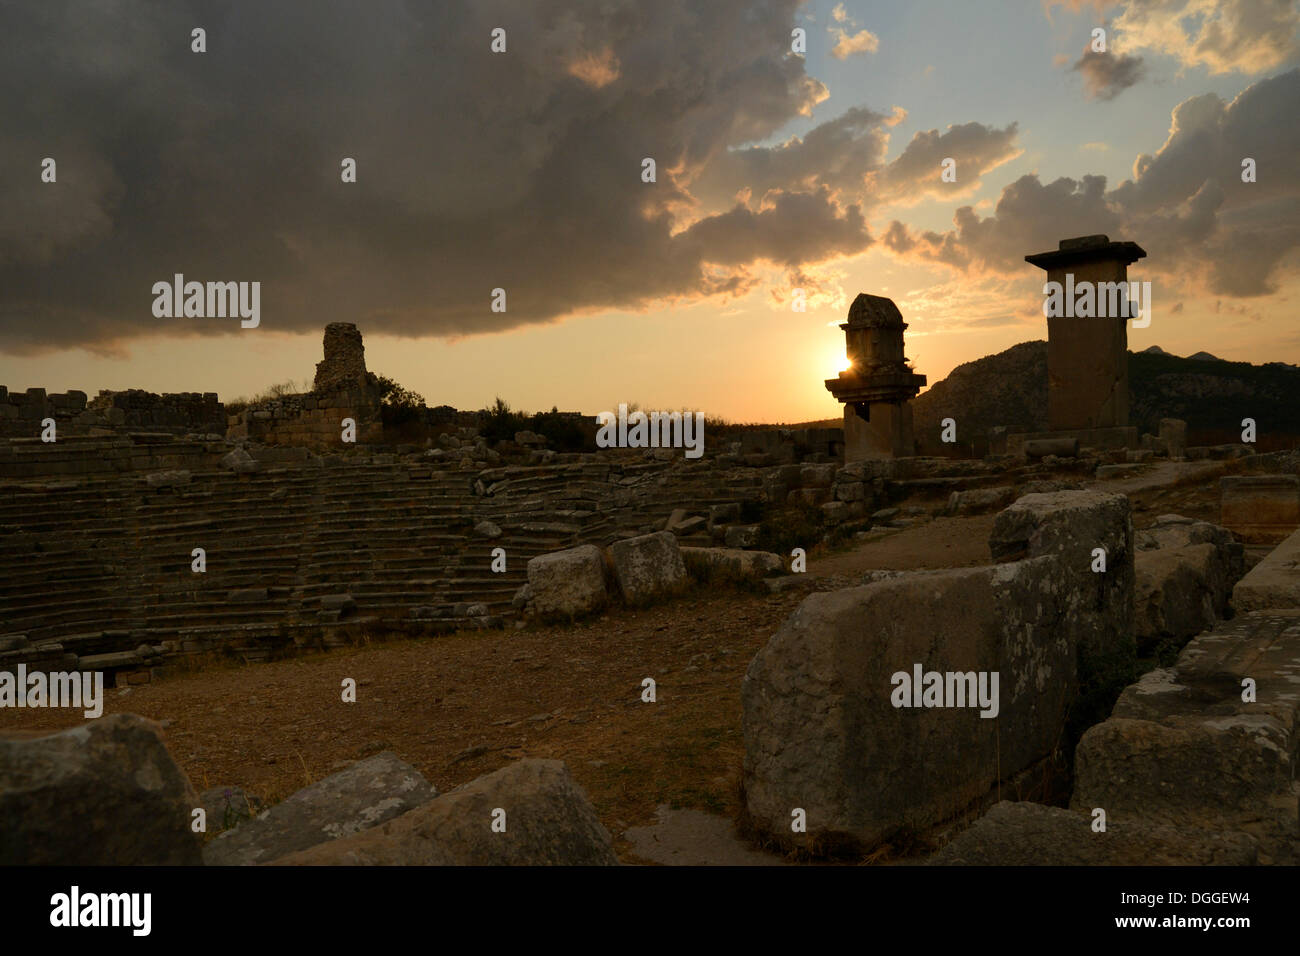 Pilastro Harpyien tombe della antica città di Xanthos al tramonto, Xanthos, Xanthostal, Lykien, Turchia Foto Stock